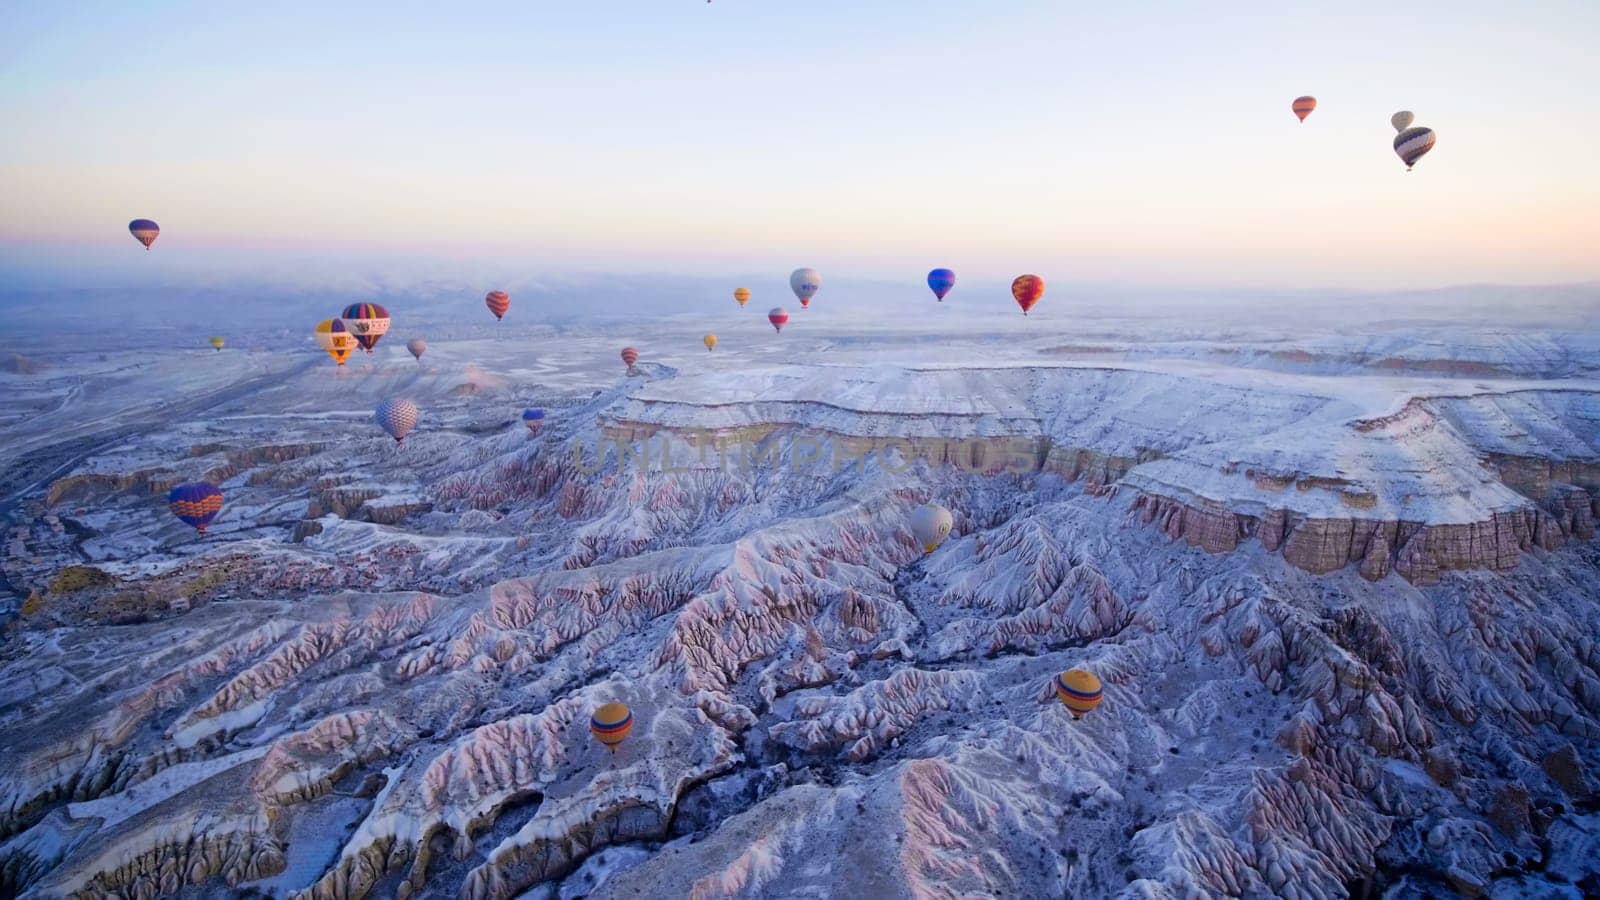 Color balloons in the sunrise sky. Cappadocia, Turkey. by DovidPro